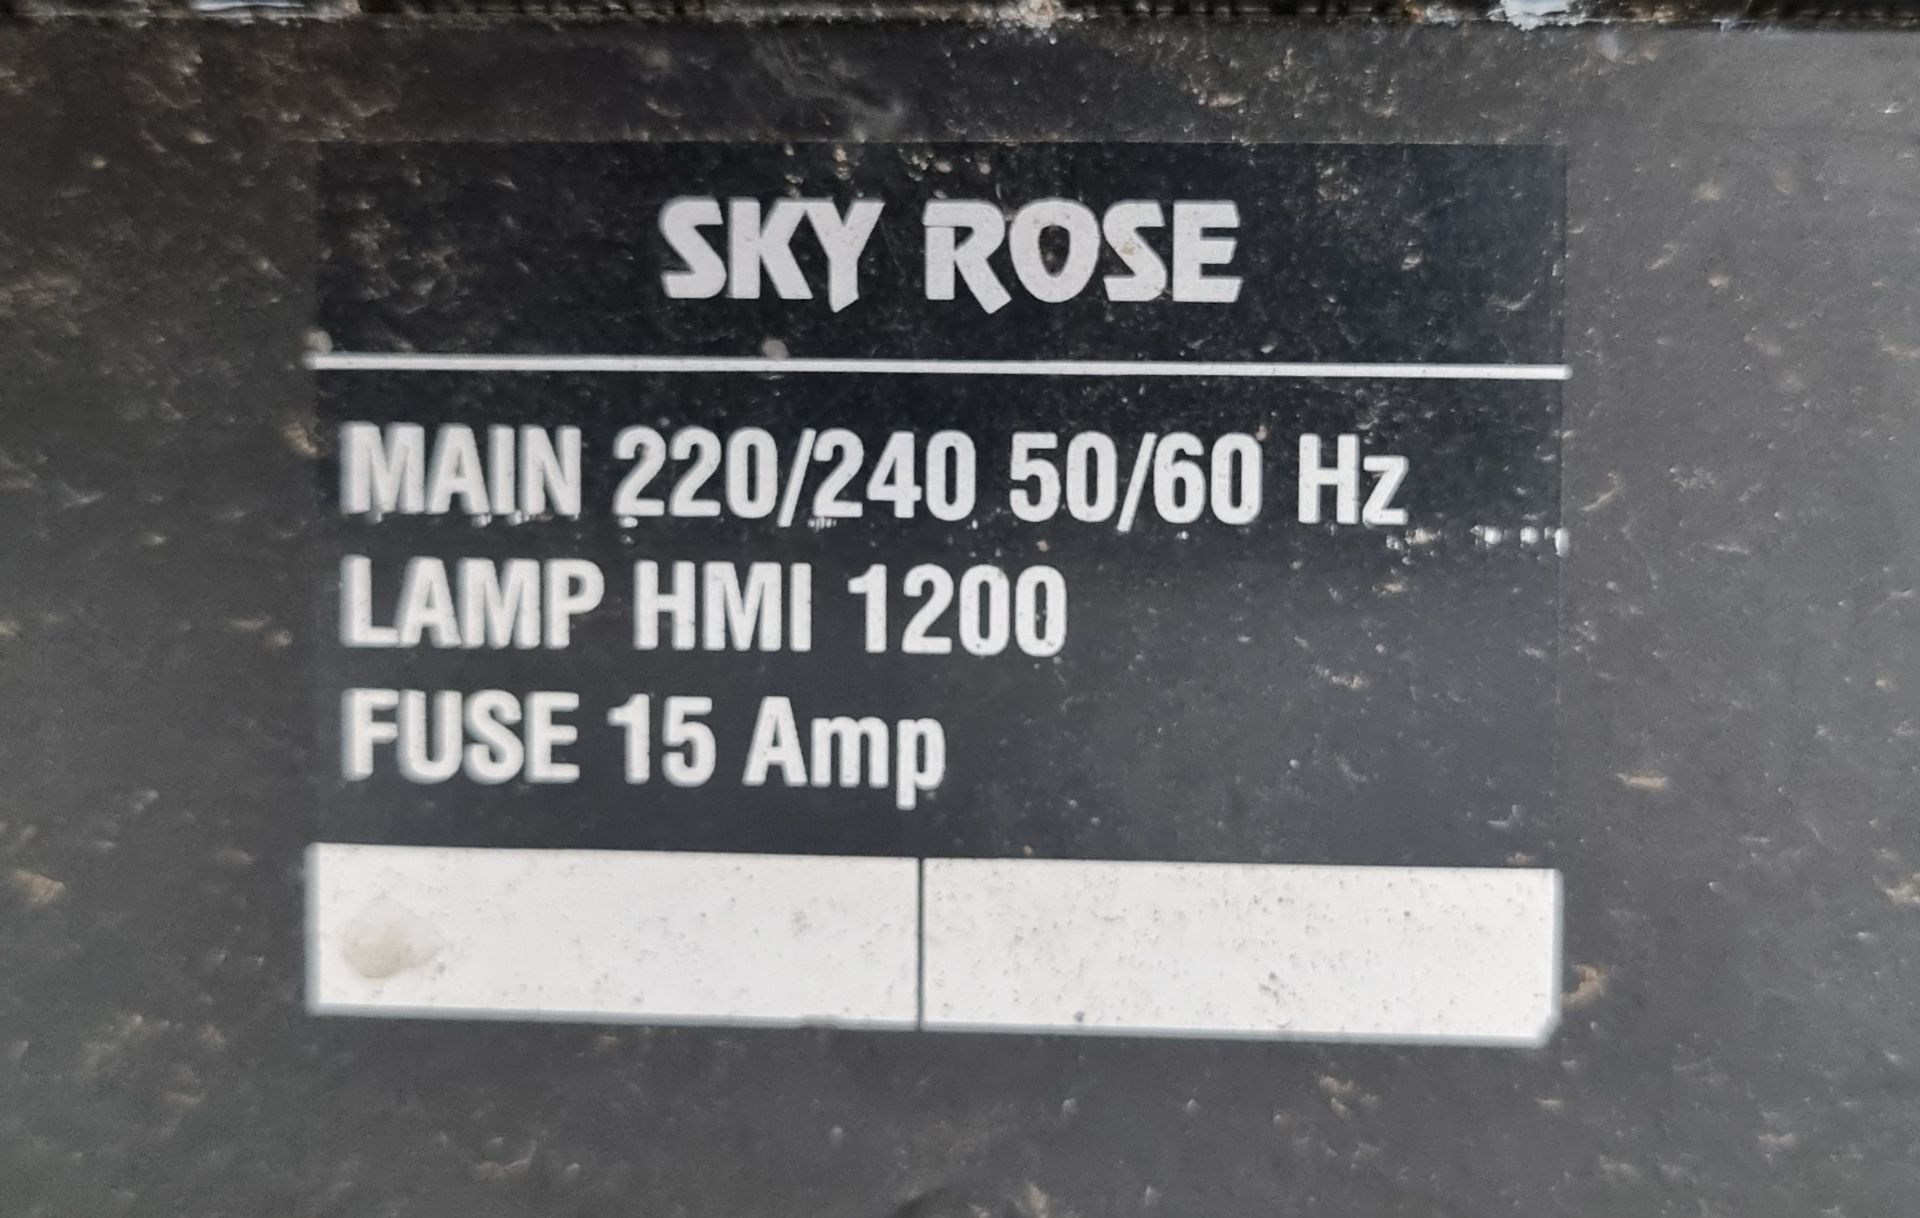 Griven sky rose 1200w sky projector - L 810 x W 675 x H 1050 mm - UNIT HAS NO SHUTTER - Image 5 of 7